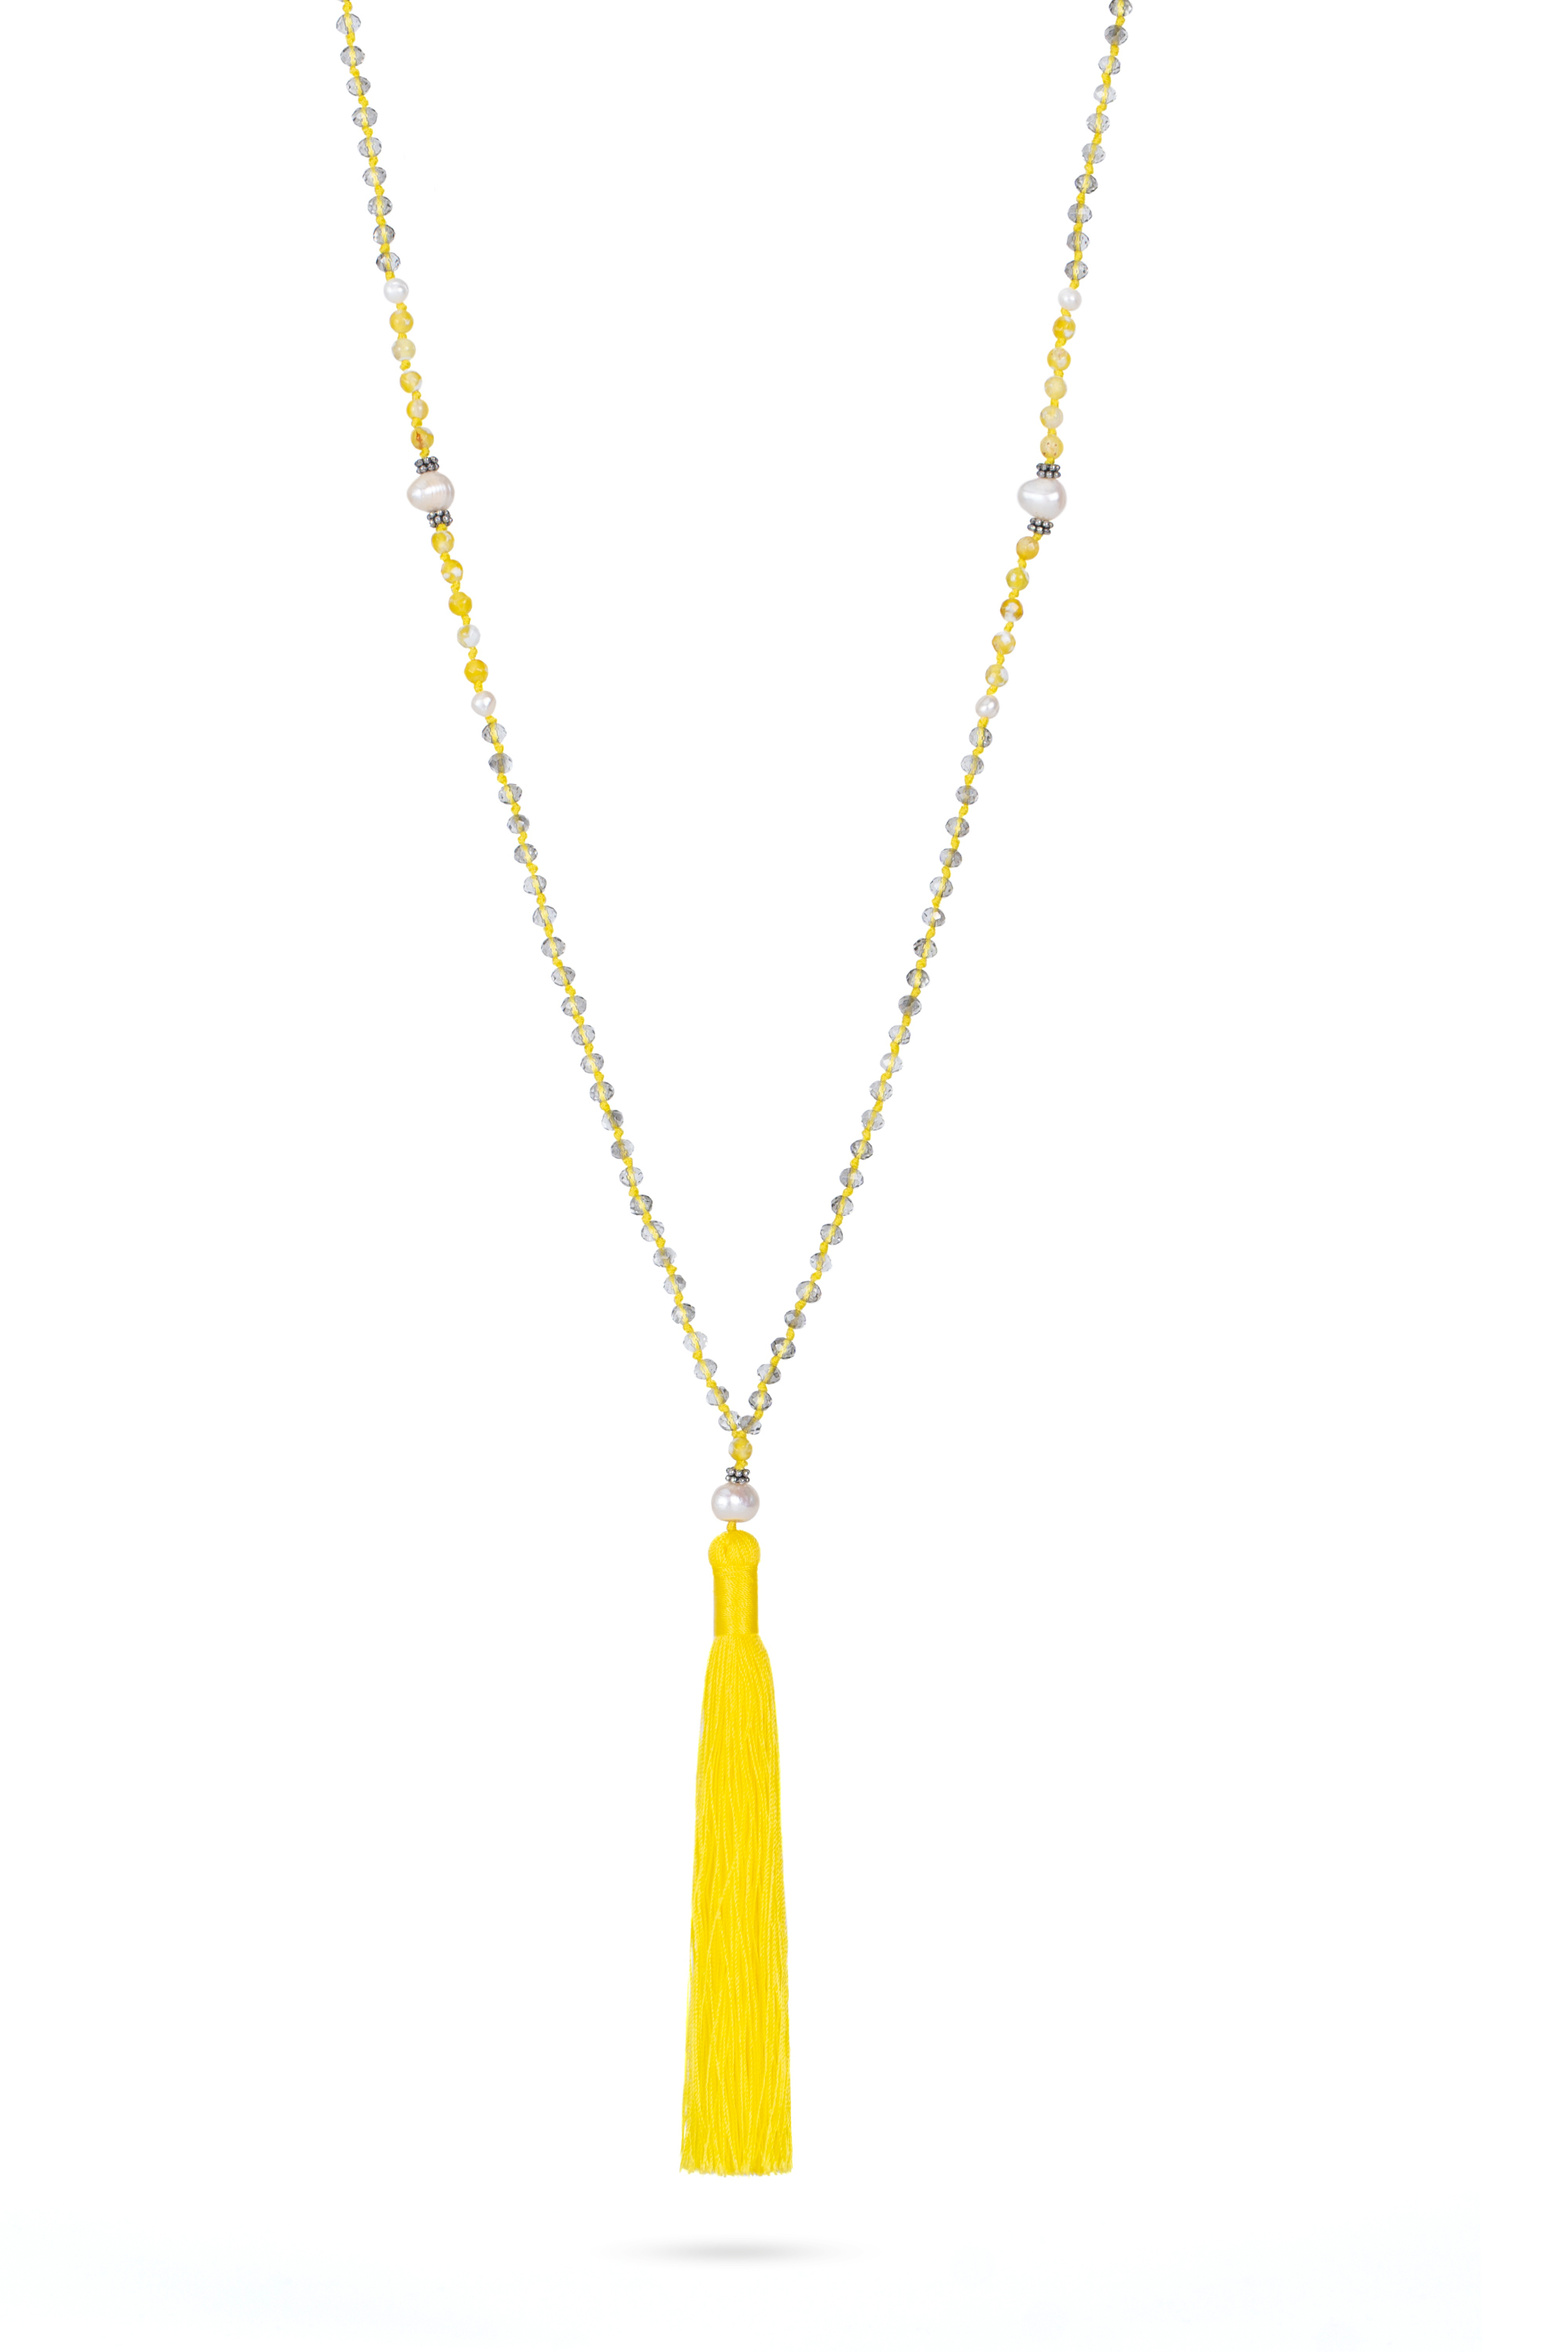 n2000_tassel_necklace_yellow_zing.jpg